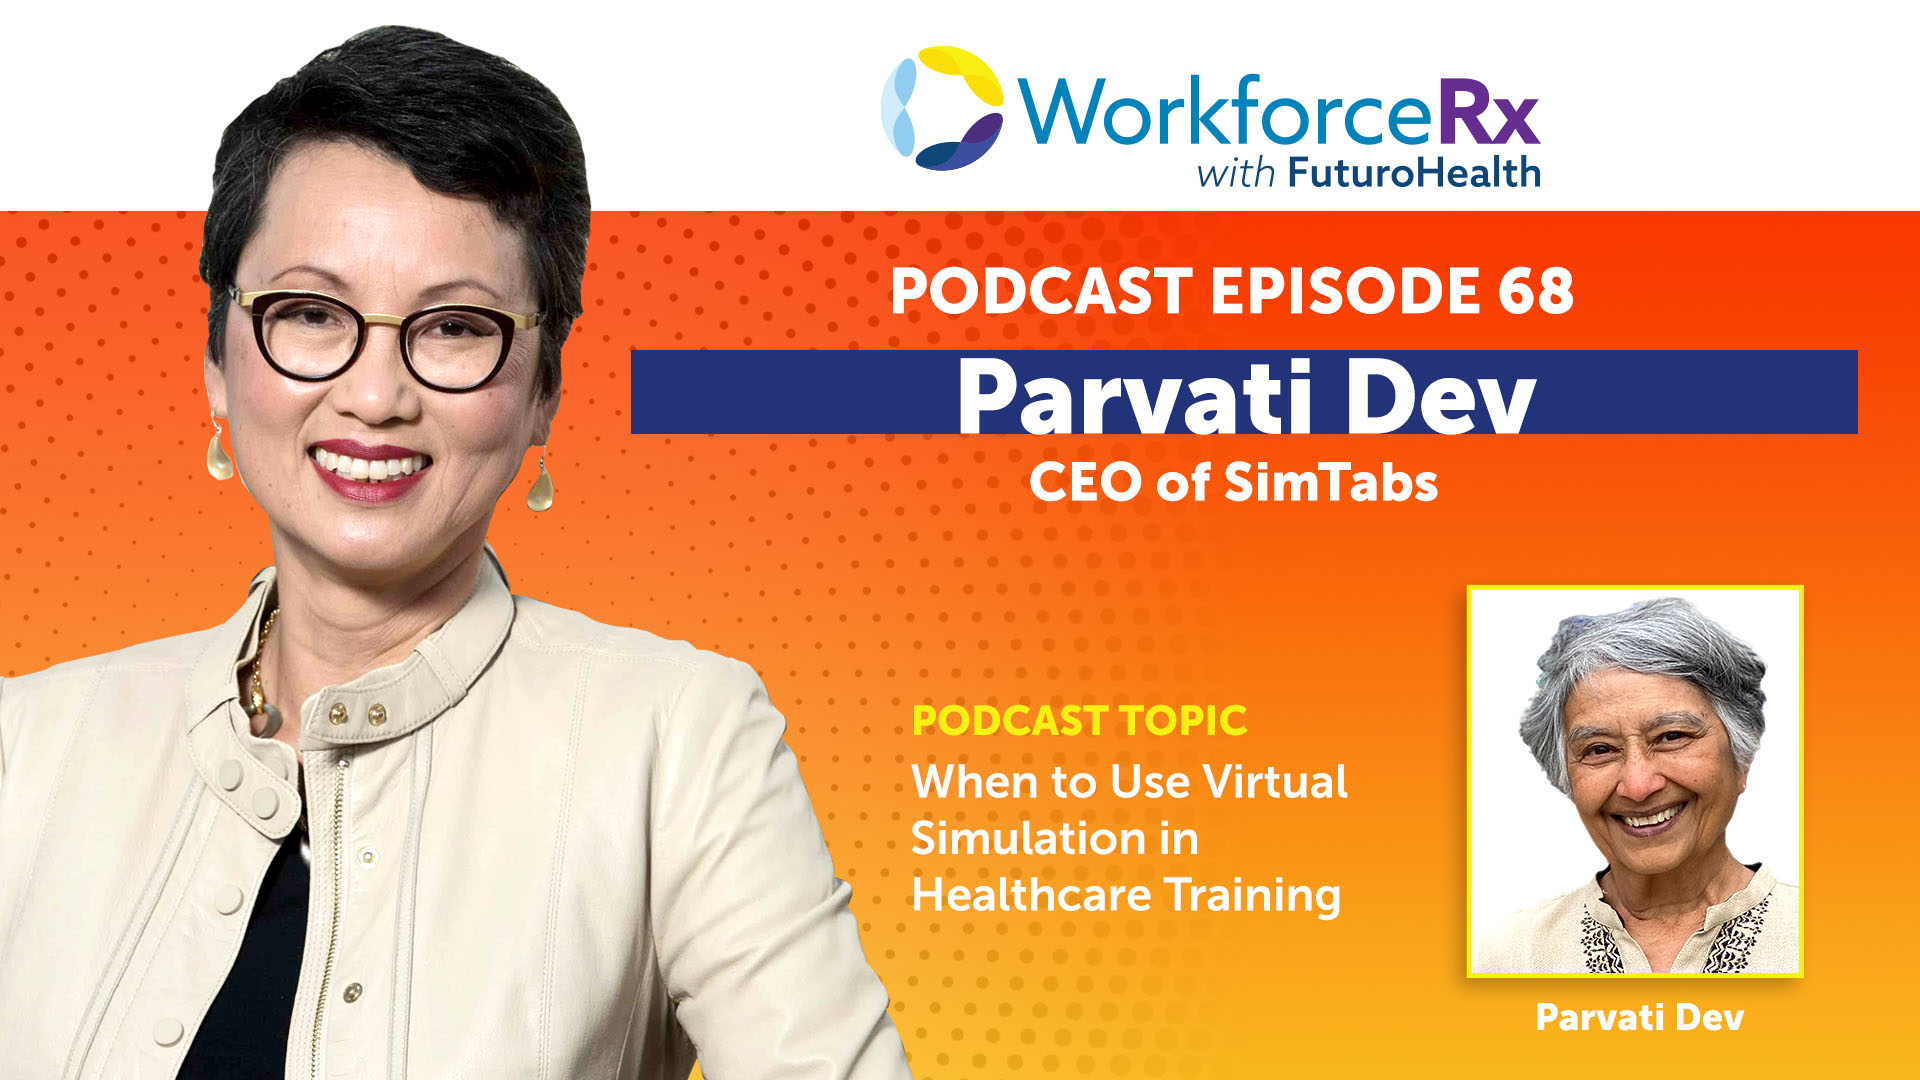 EP68 WorkforceRx Podcast Parvati Dev